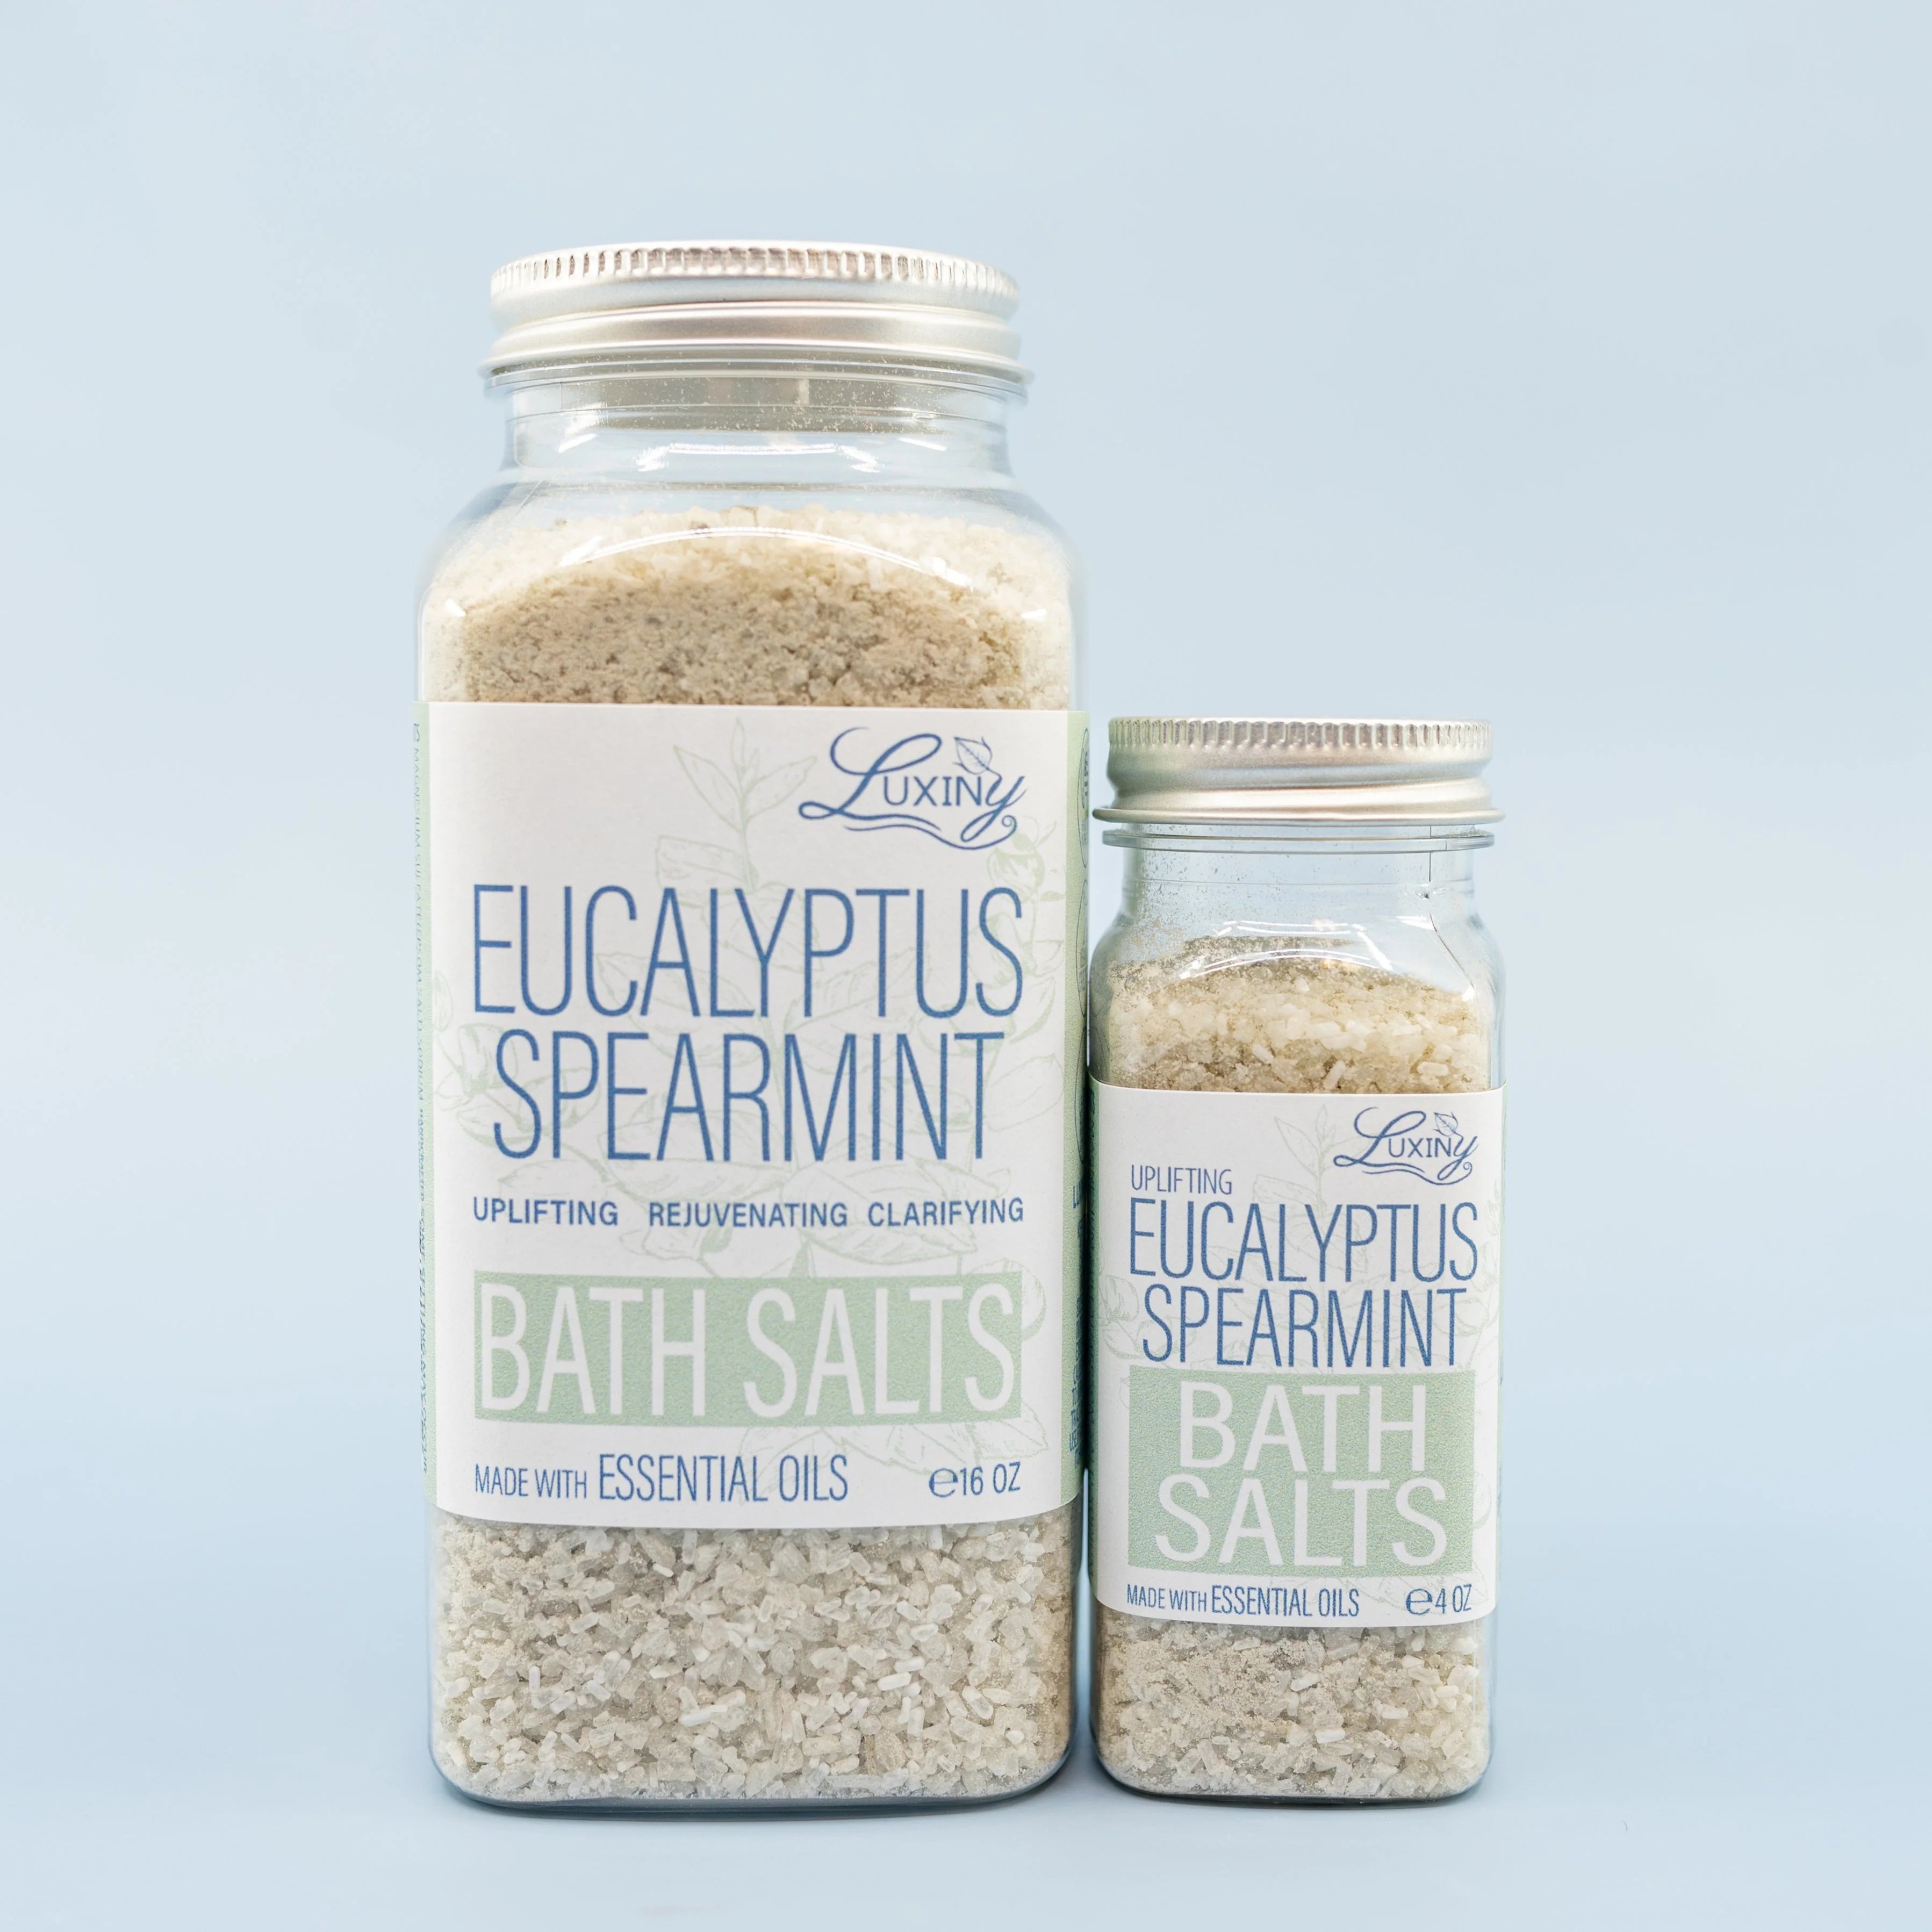 Luxiny Products - Bath Salts - Eucalyptus Spearmint Essential Oil